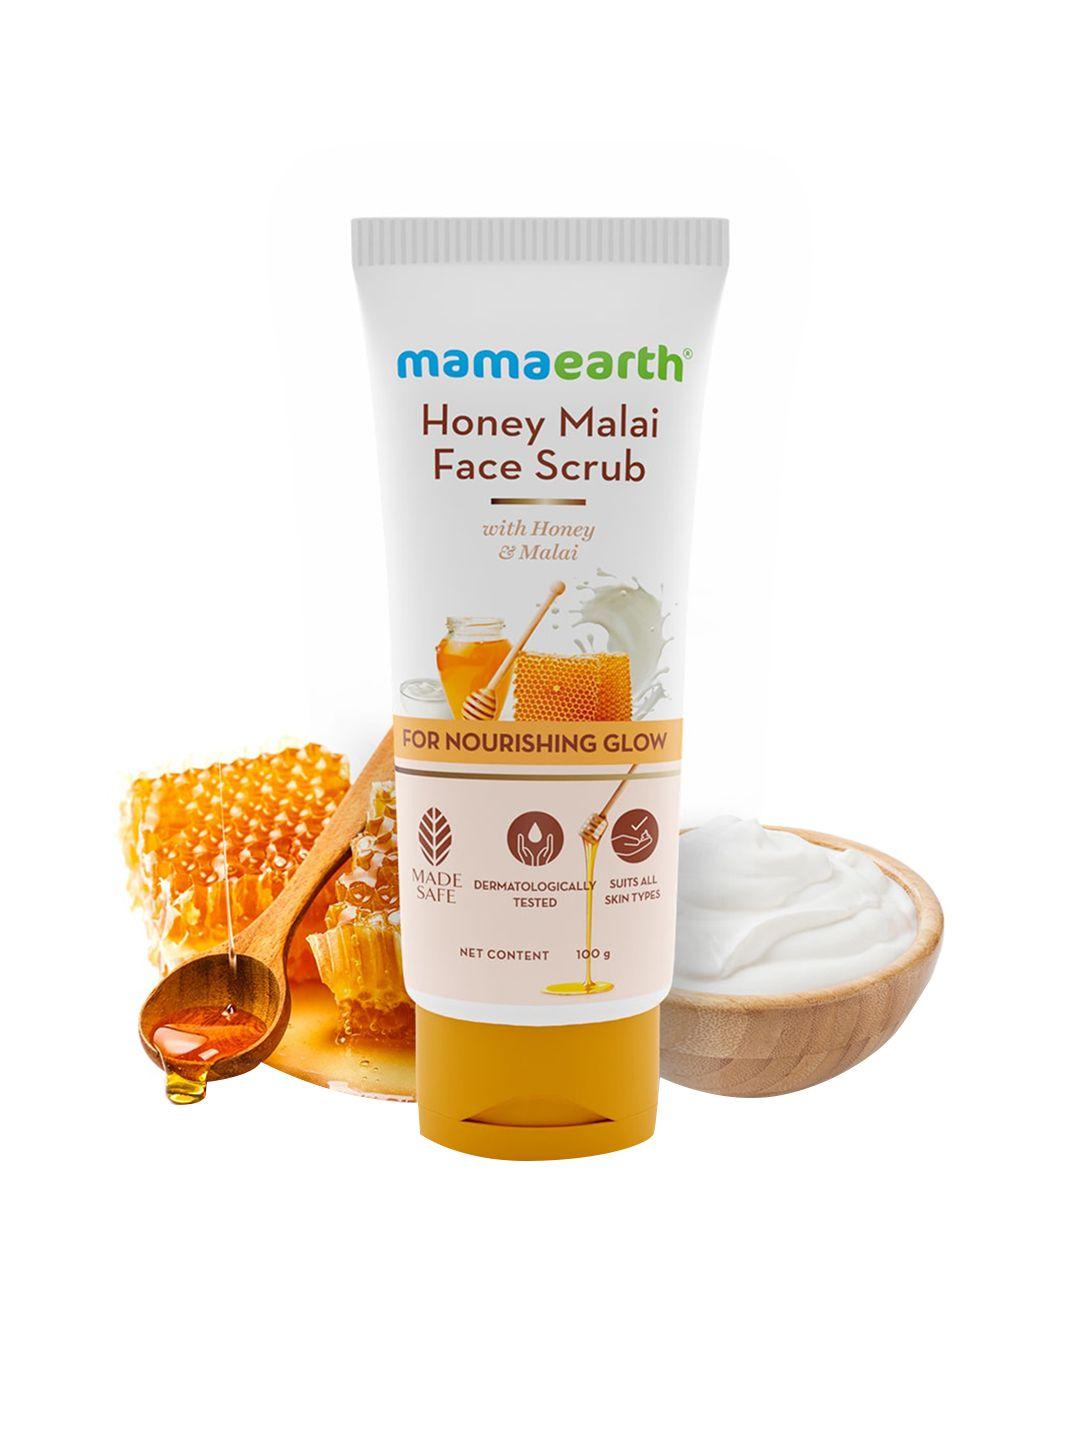 mamaearth honey malai face scrub for nourishing glow 100 g